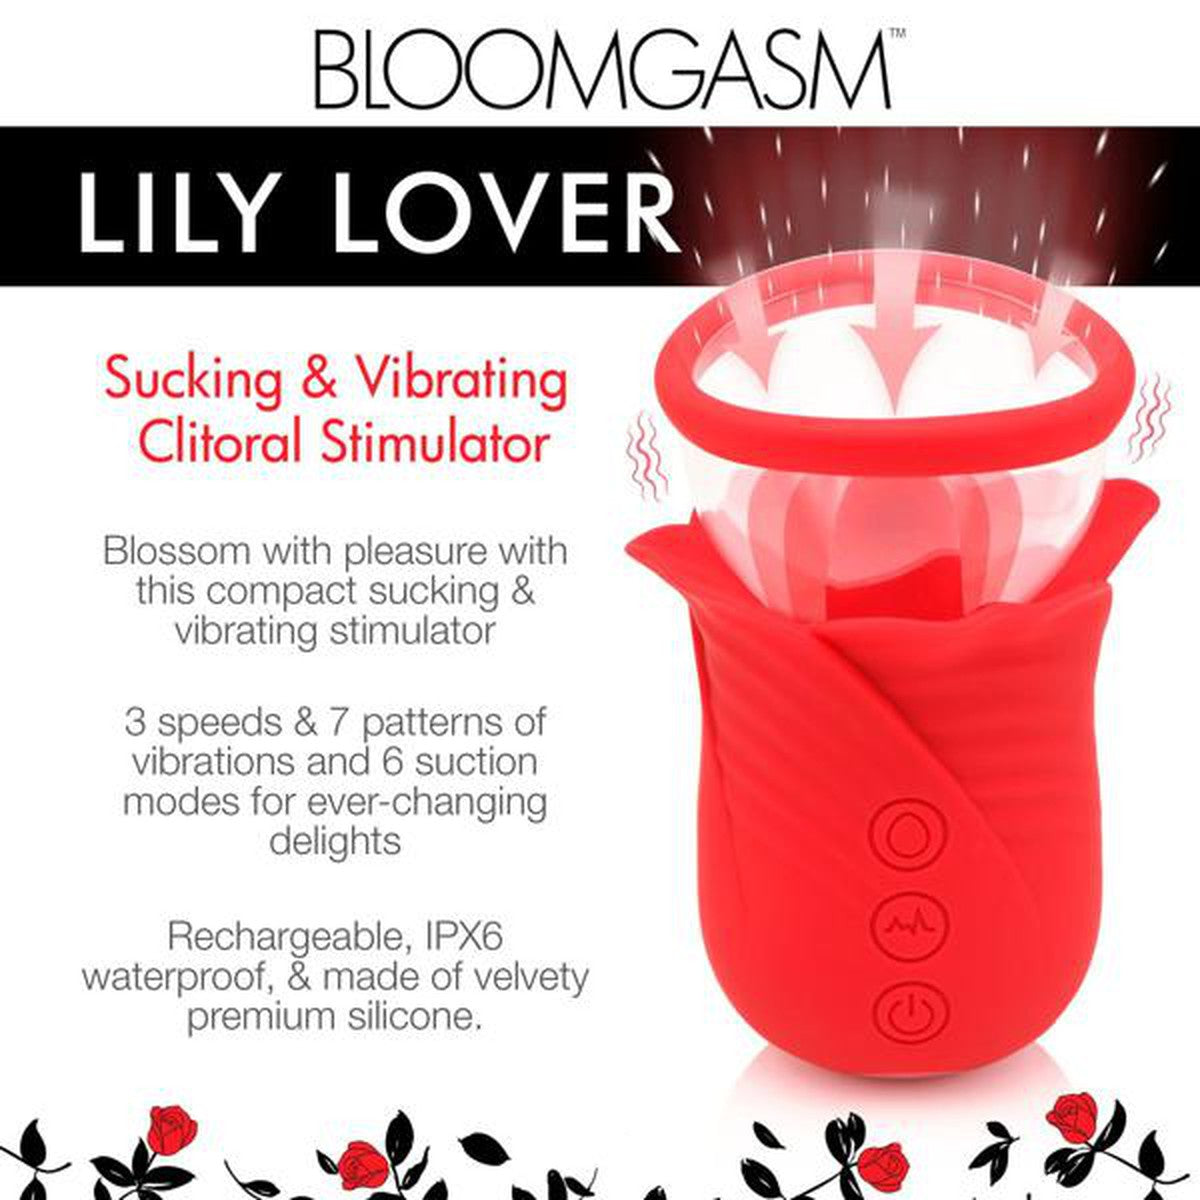 Lily Lover Sucking & Vibrating Clitoral Stimulator